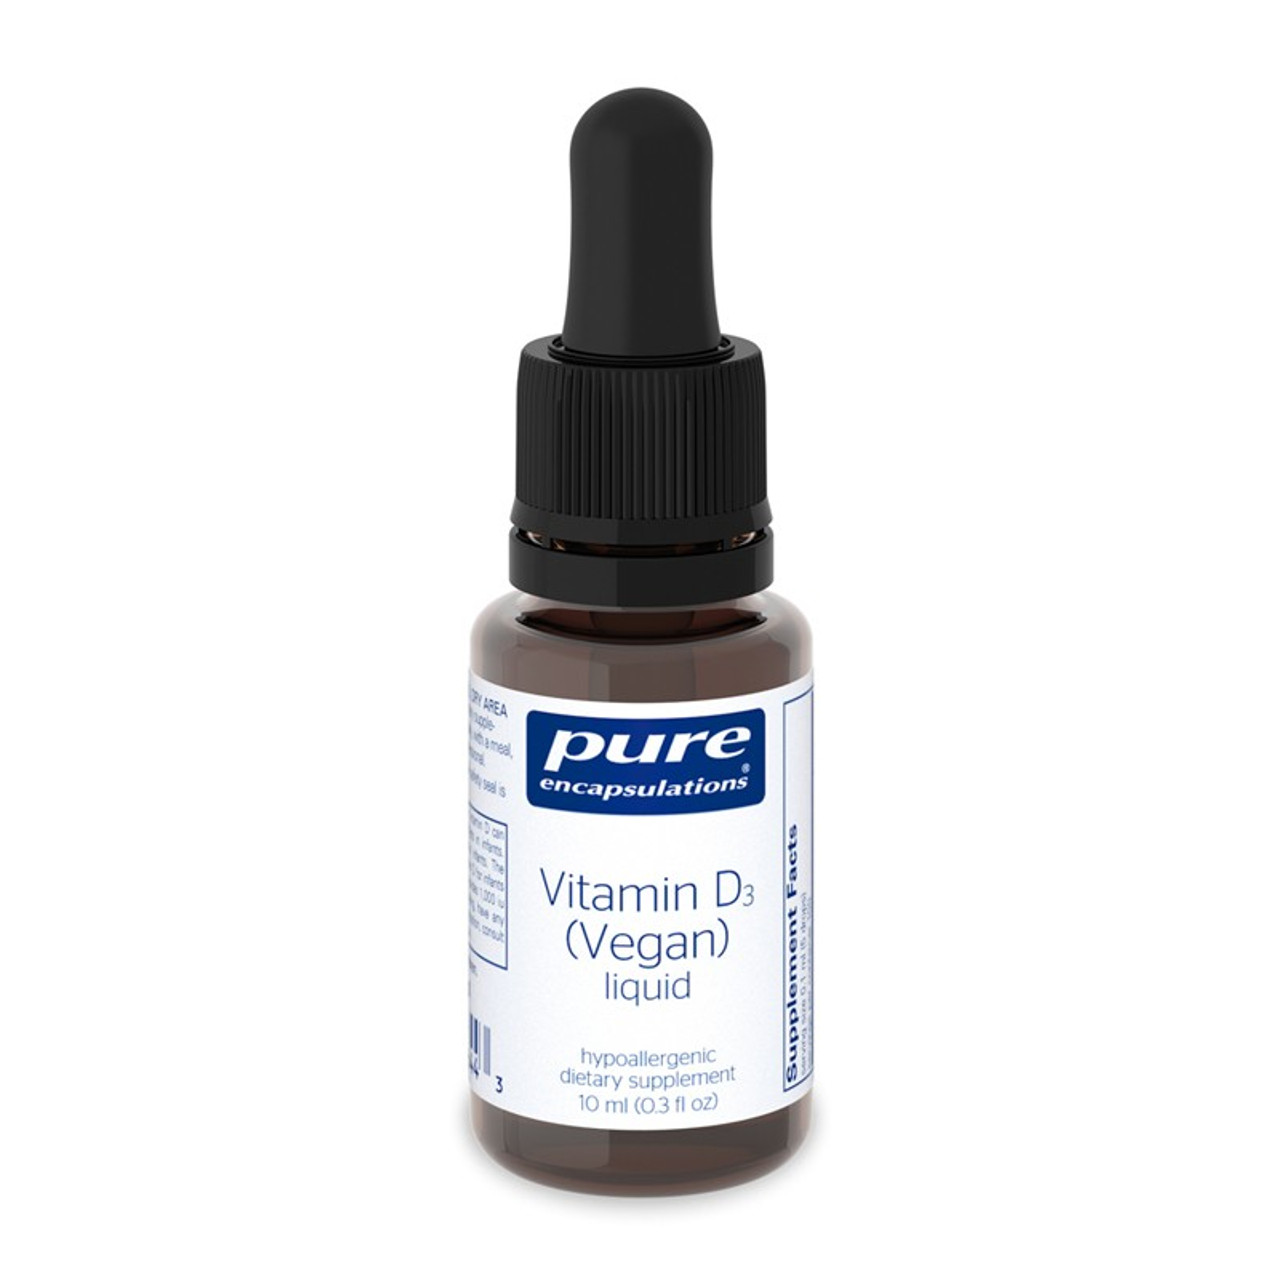 Vitamin D3 (Vegan) liquid - 10 ml by Pure Encapsulations